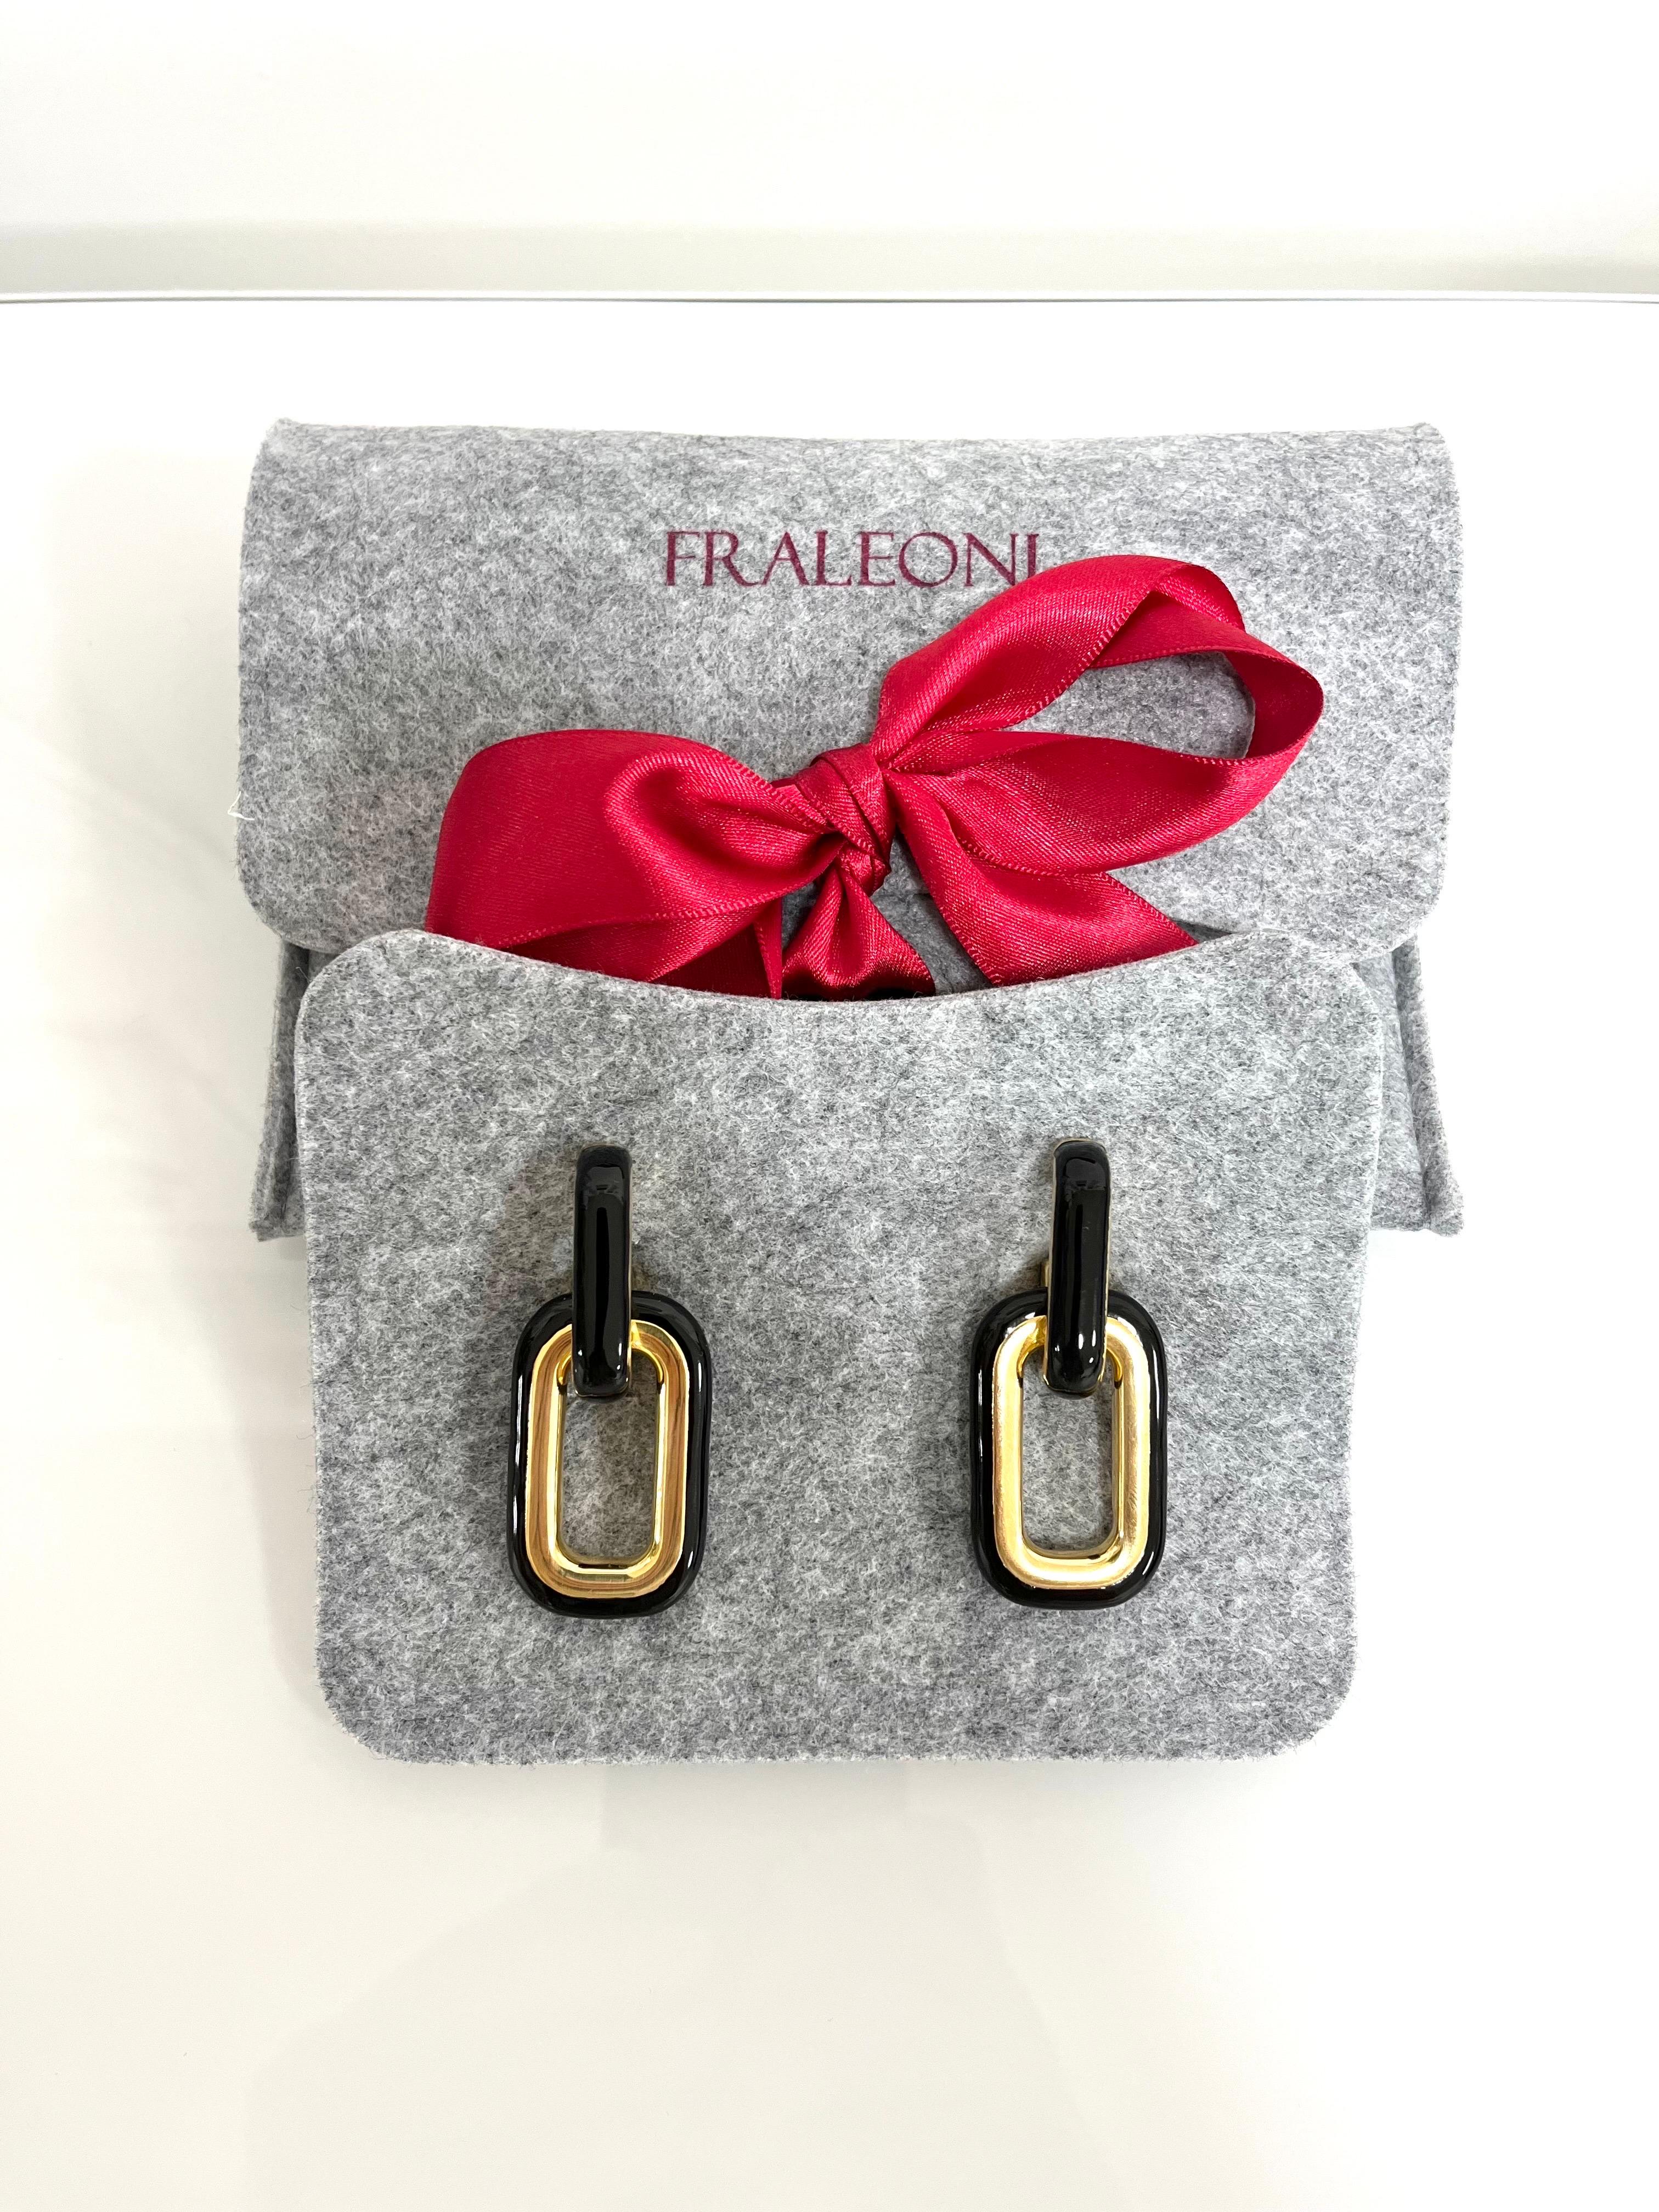 Fraleoni 925 Silver Gold Plated Black Enamel Earrings For Sale 5